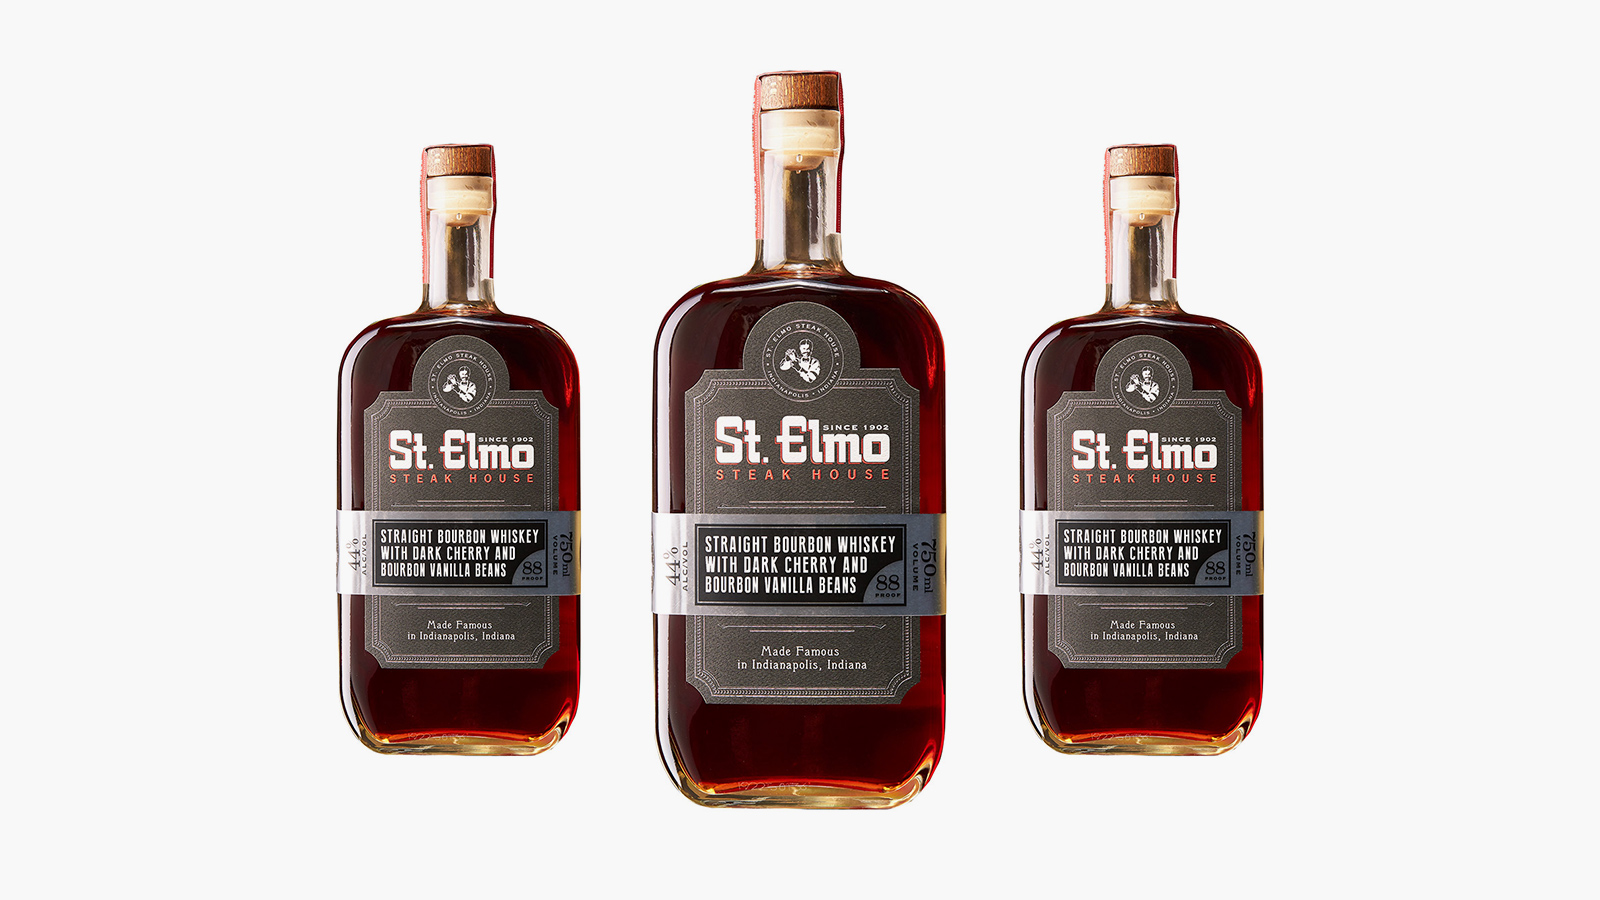 St. Elmo Straight Bourbon Whiskey